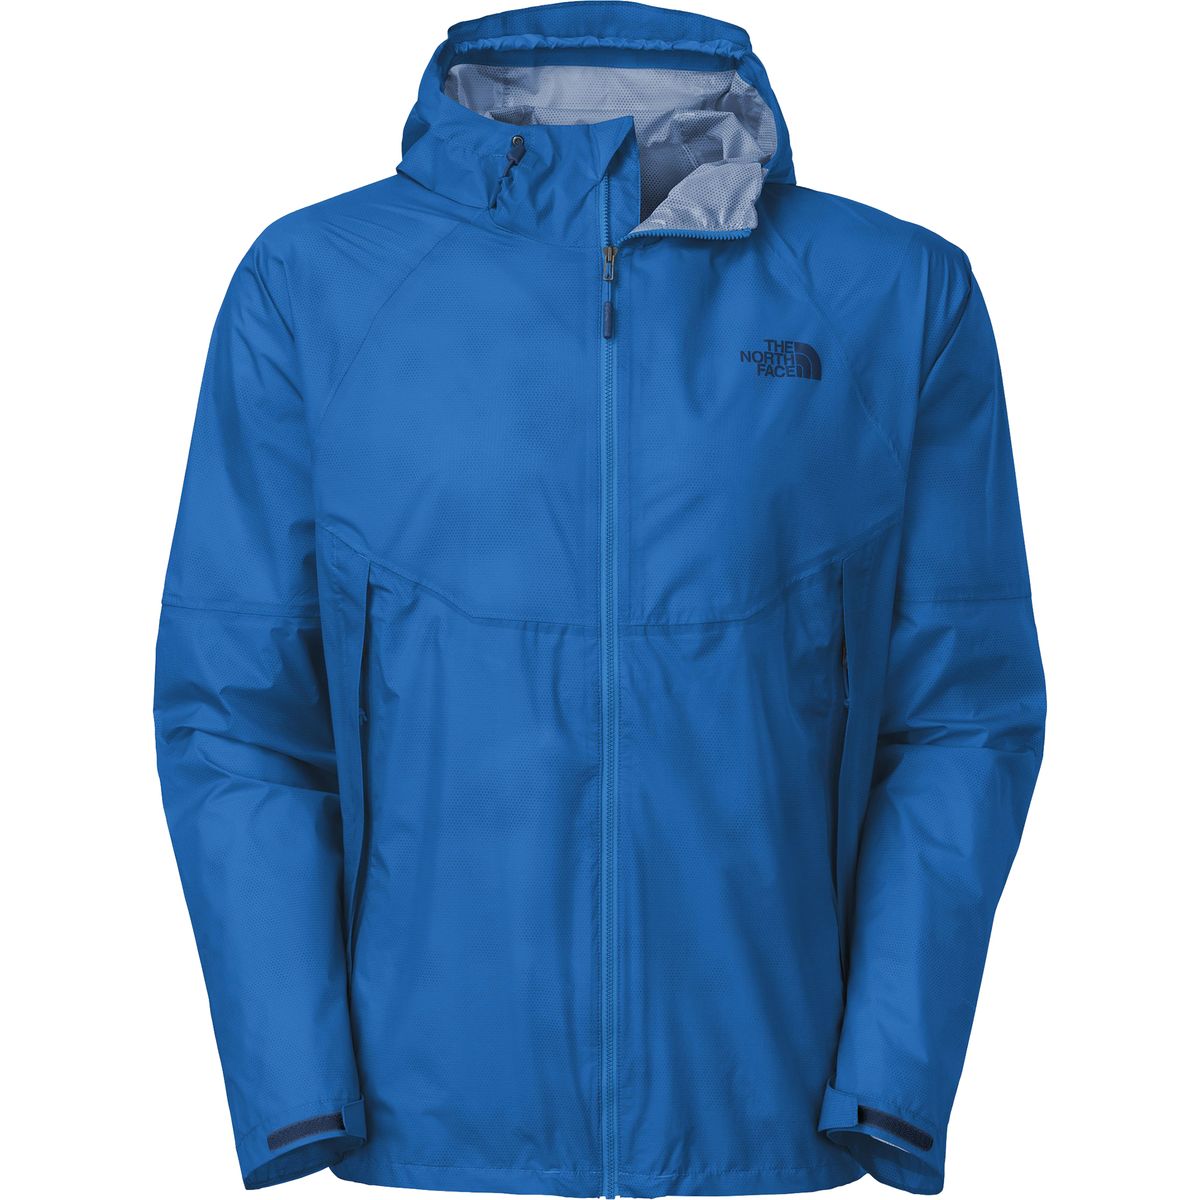 The North Face Kilowatt Ltd Jacket Mens Bomber Blue L